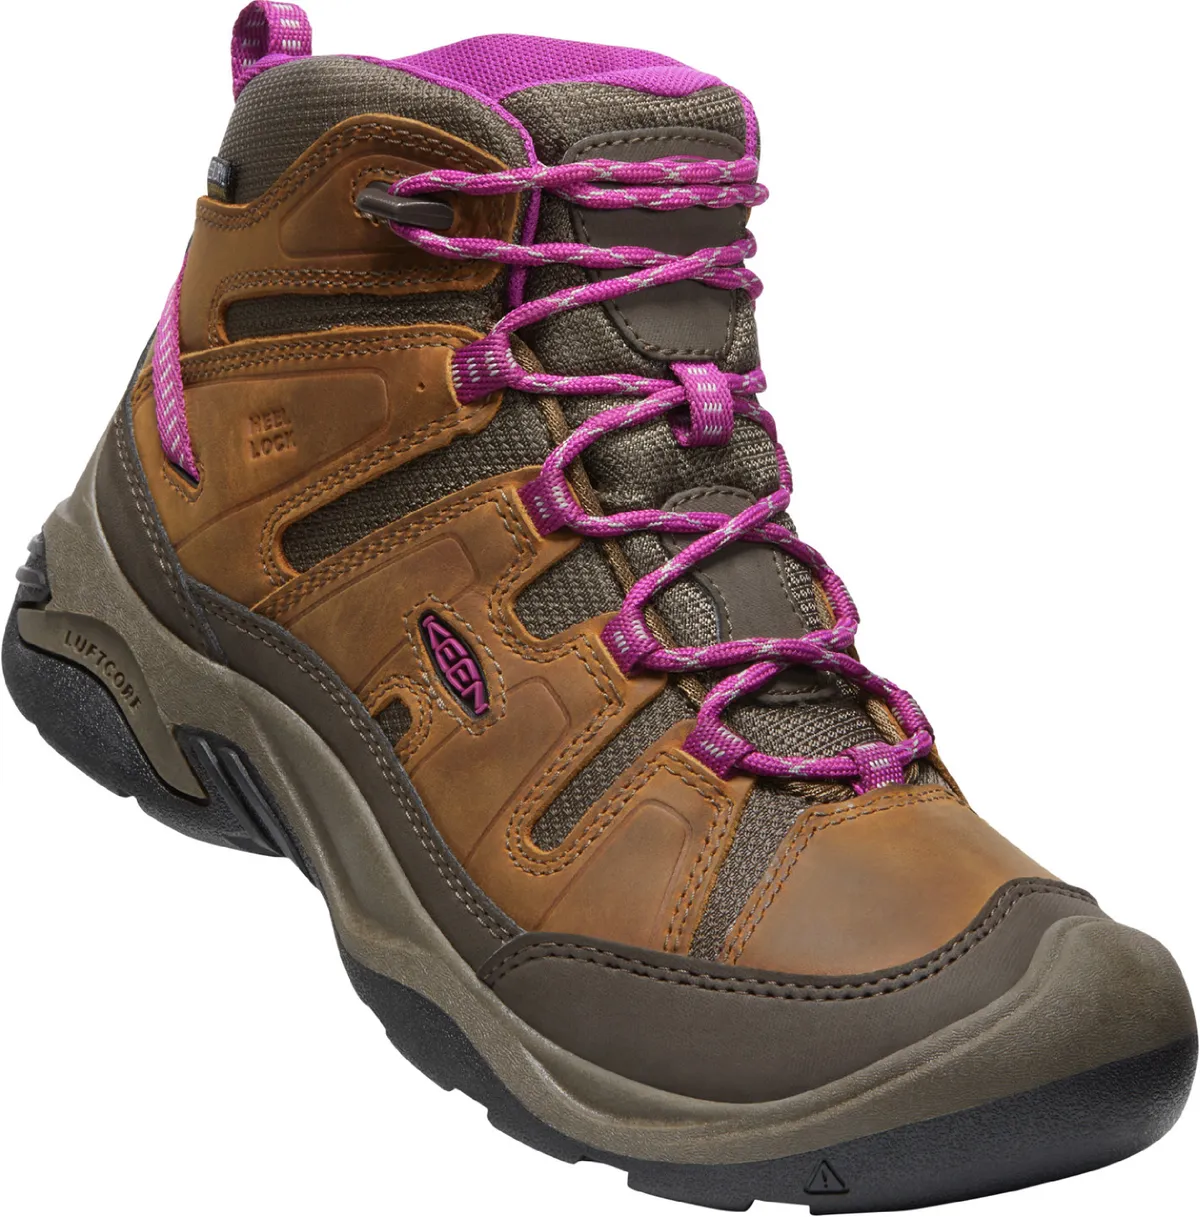 Men's Wide Hiking Boots - Circadia Waterproof Mid